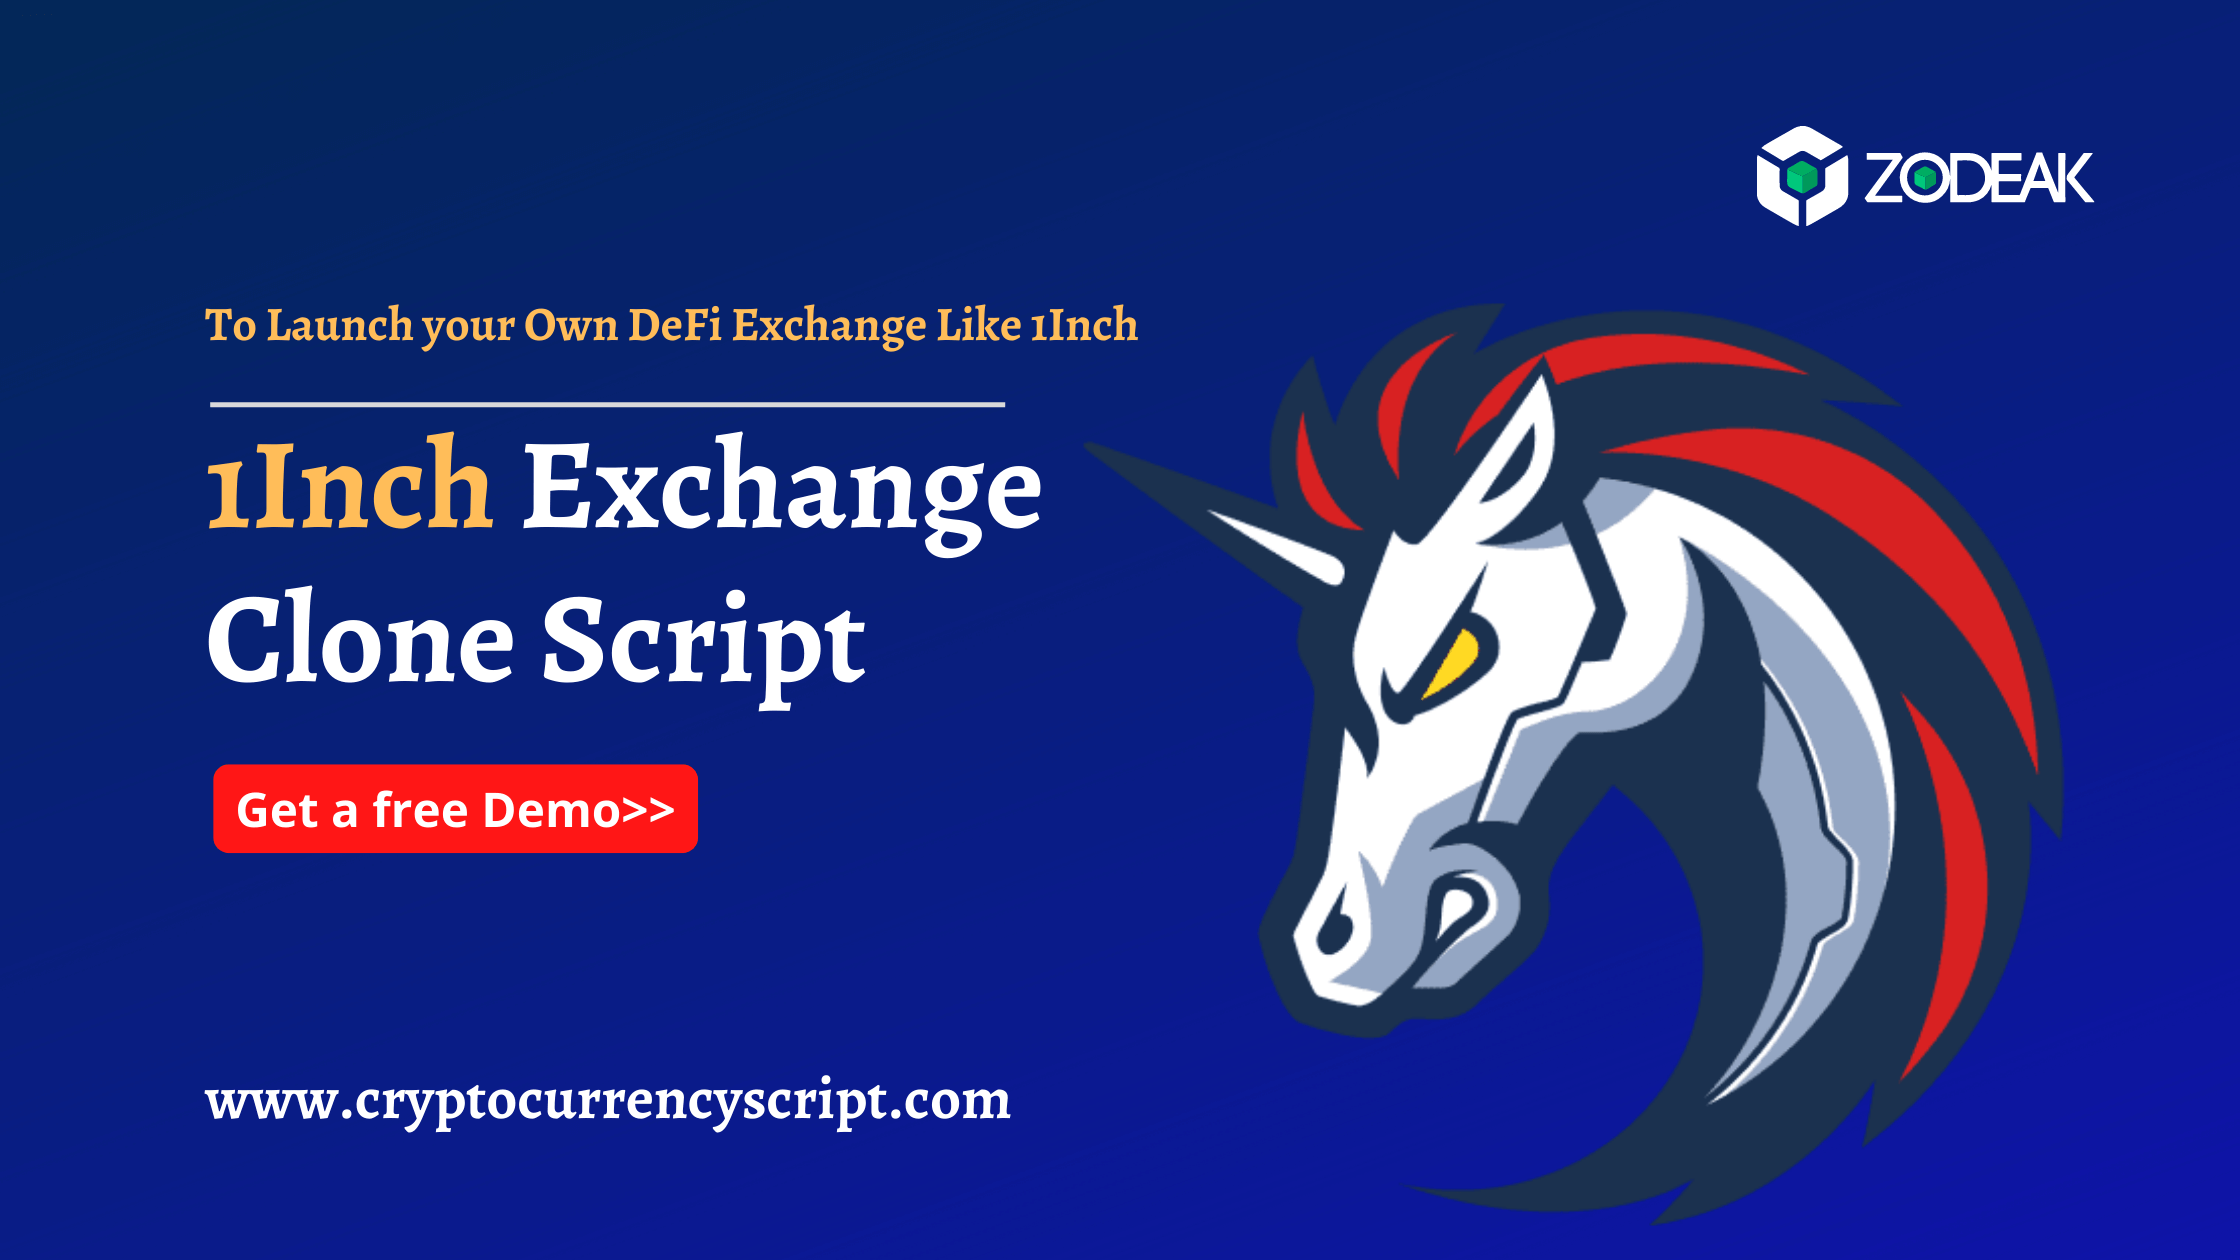 1Inch Exchange Clone Script – To create a DeFi-based DEX Aggregator platform like 1Inch